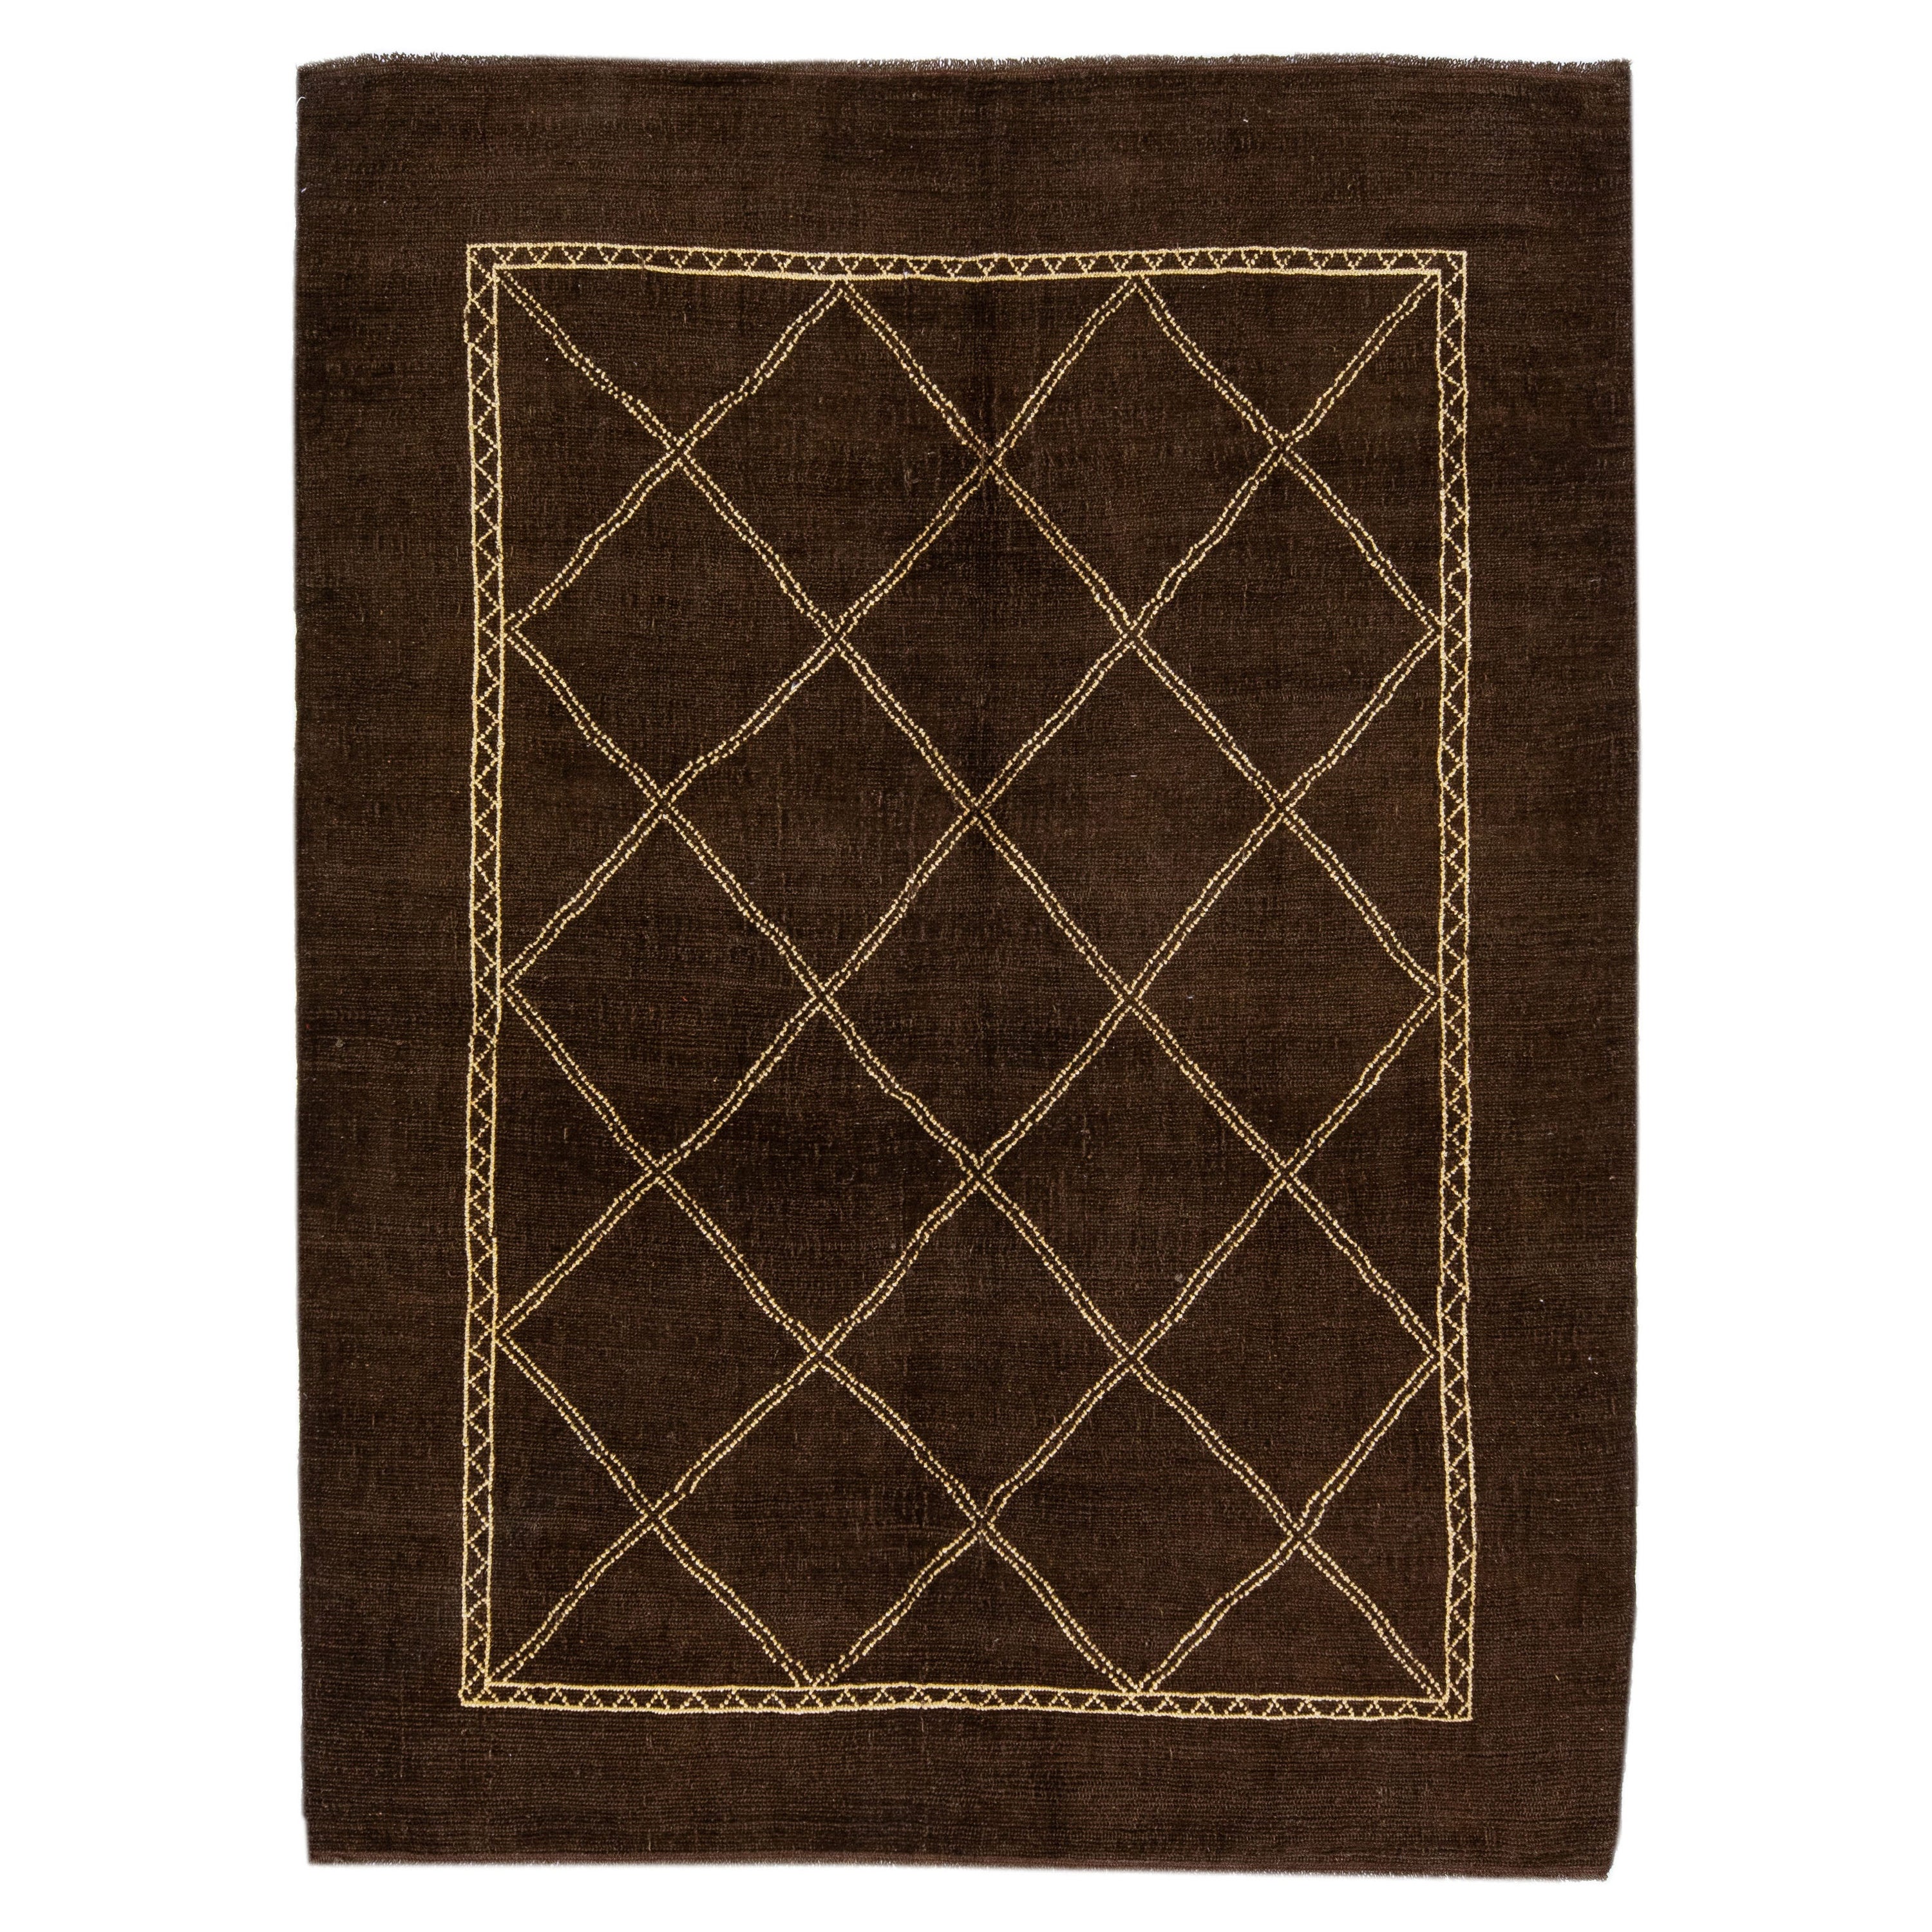 Brown Modern Moroccan Style Handmade Tribal Motif Wool Rug by Apadana